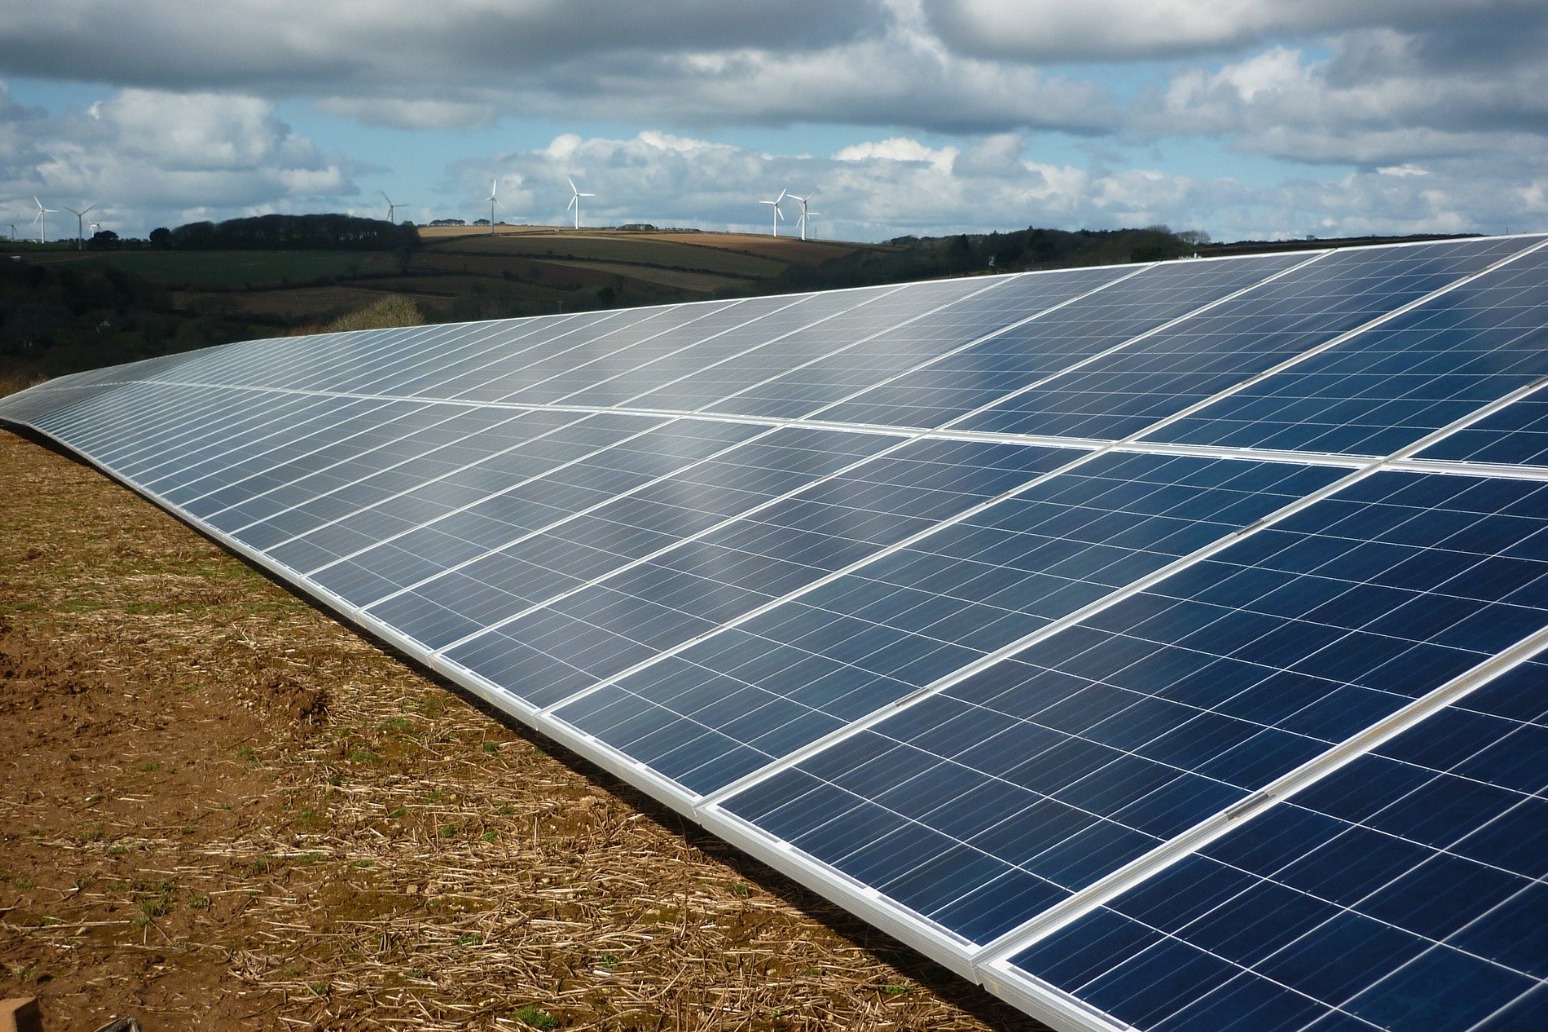 Solar company says UK needs new policies to meet 2050 carbon target 